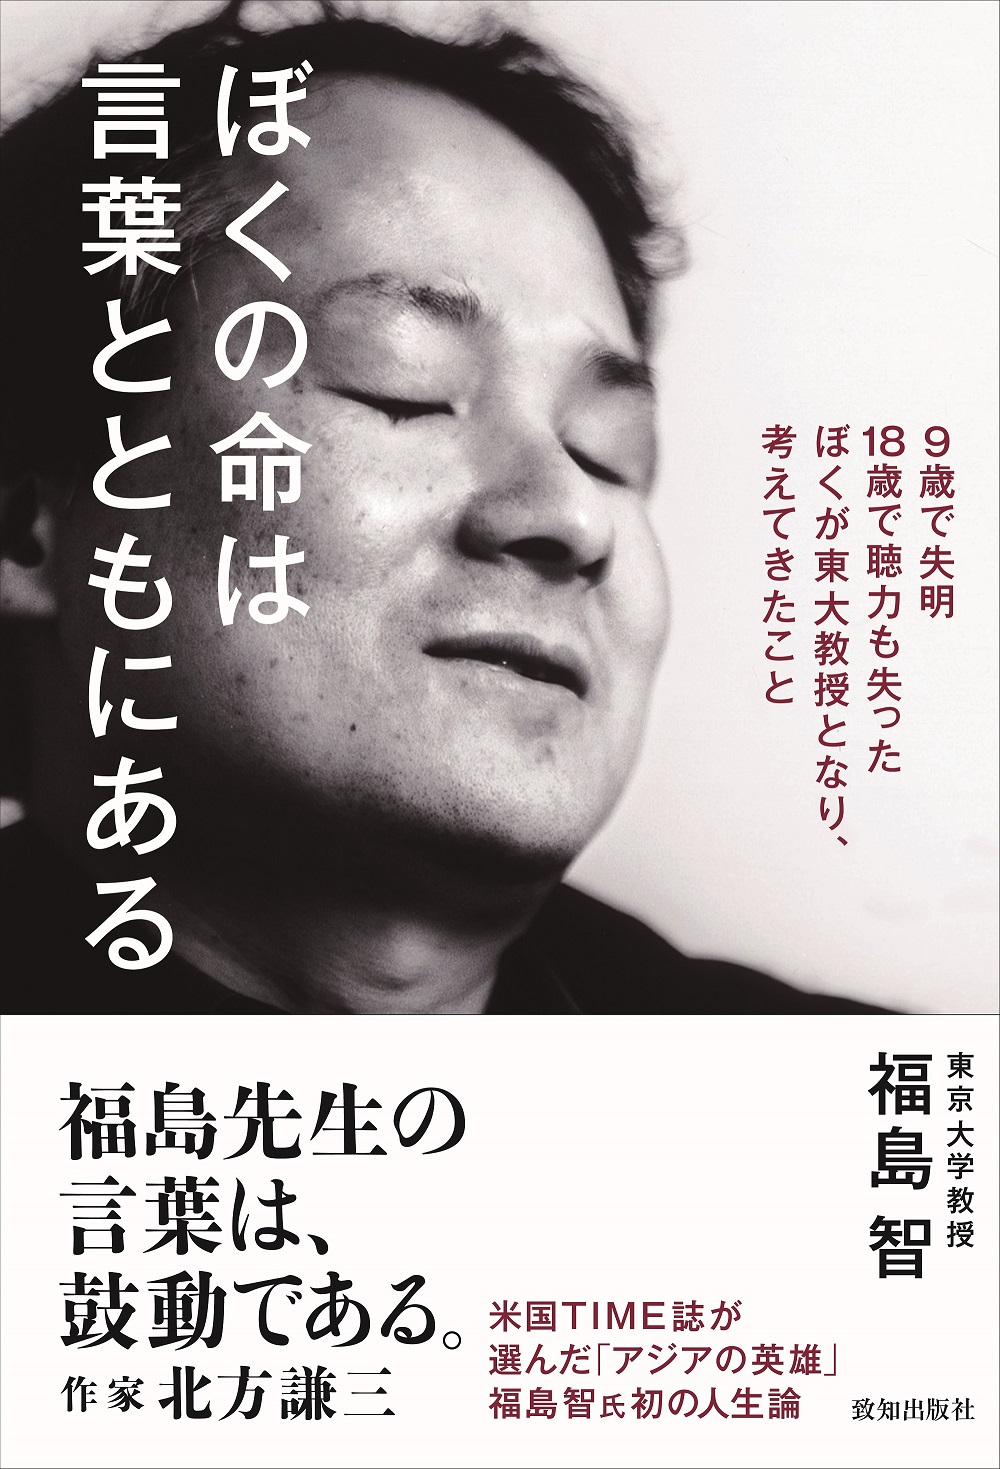 A self-portrait of Professor Fukushima on a white cover